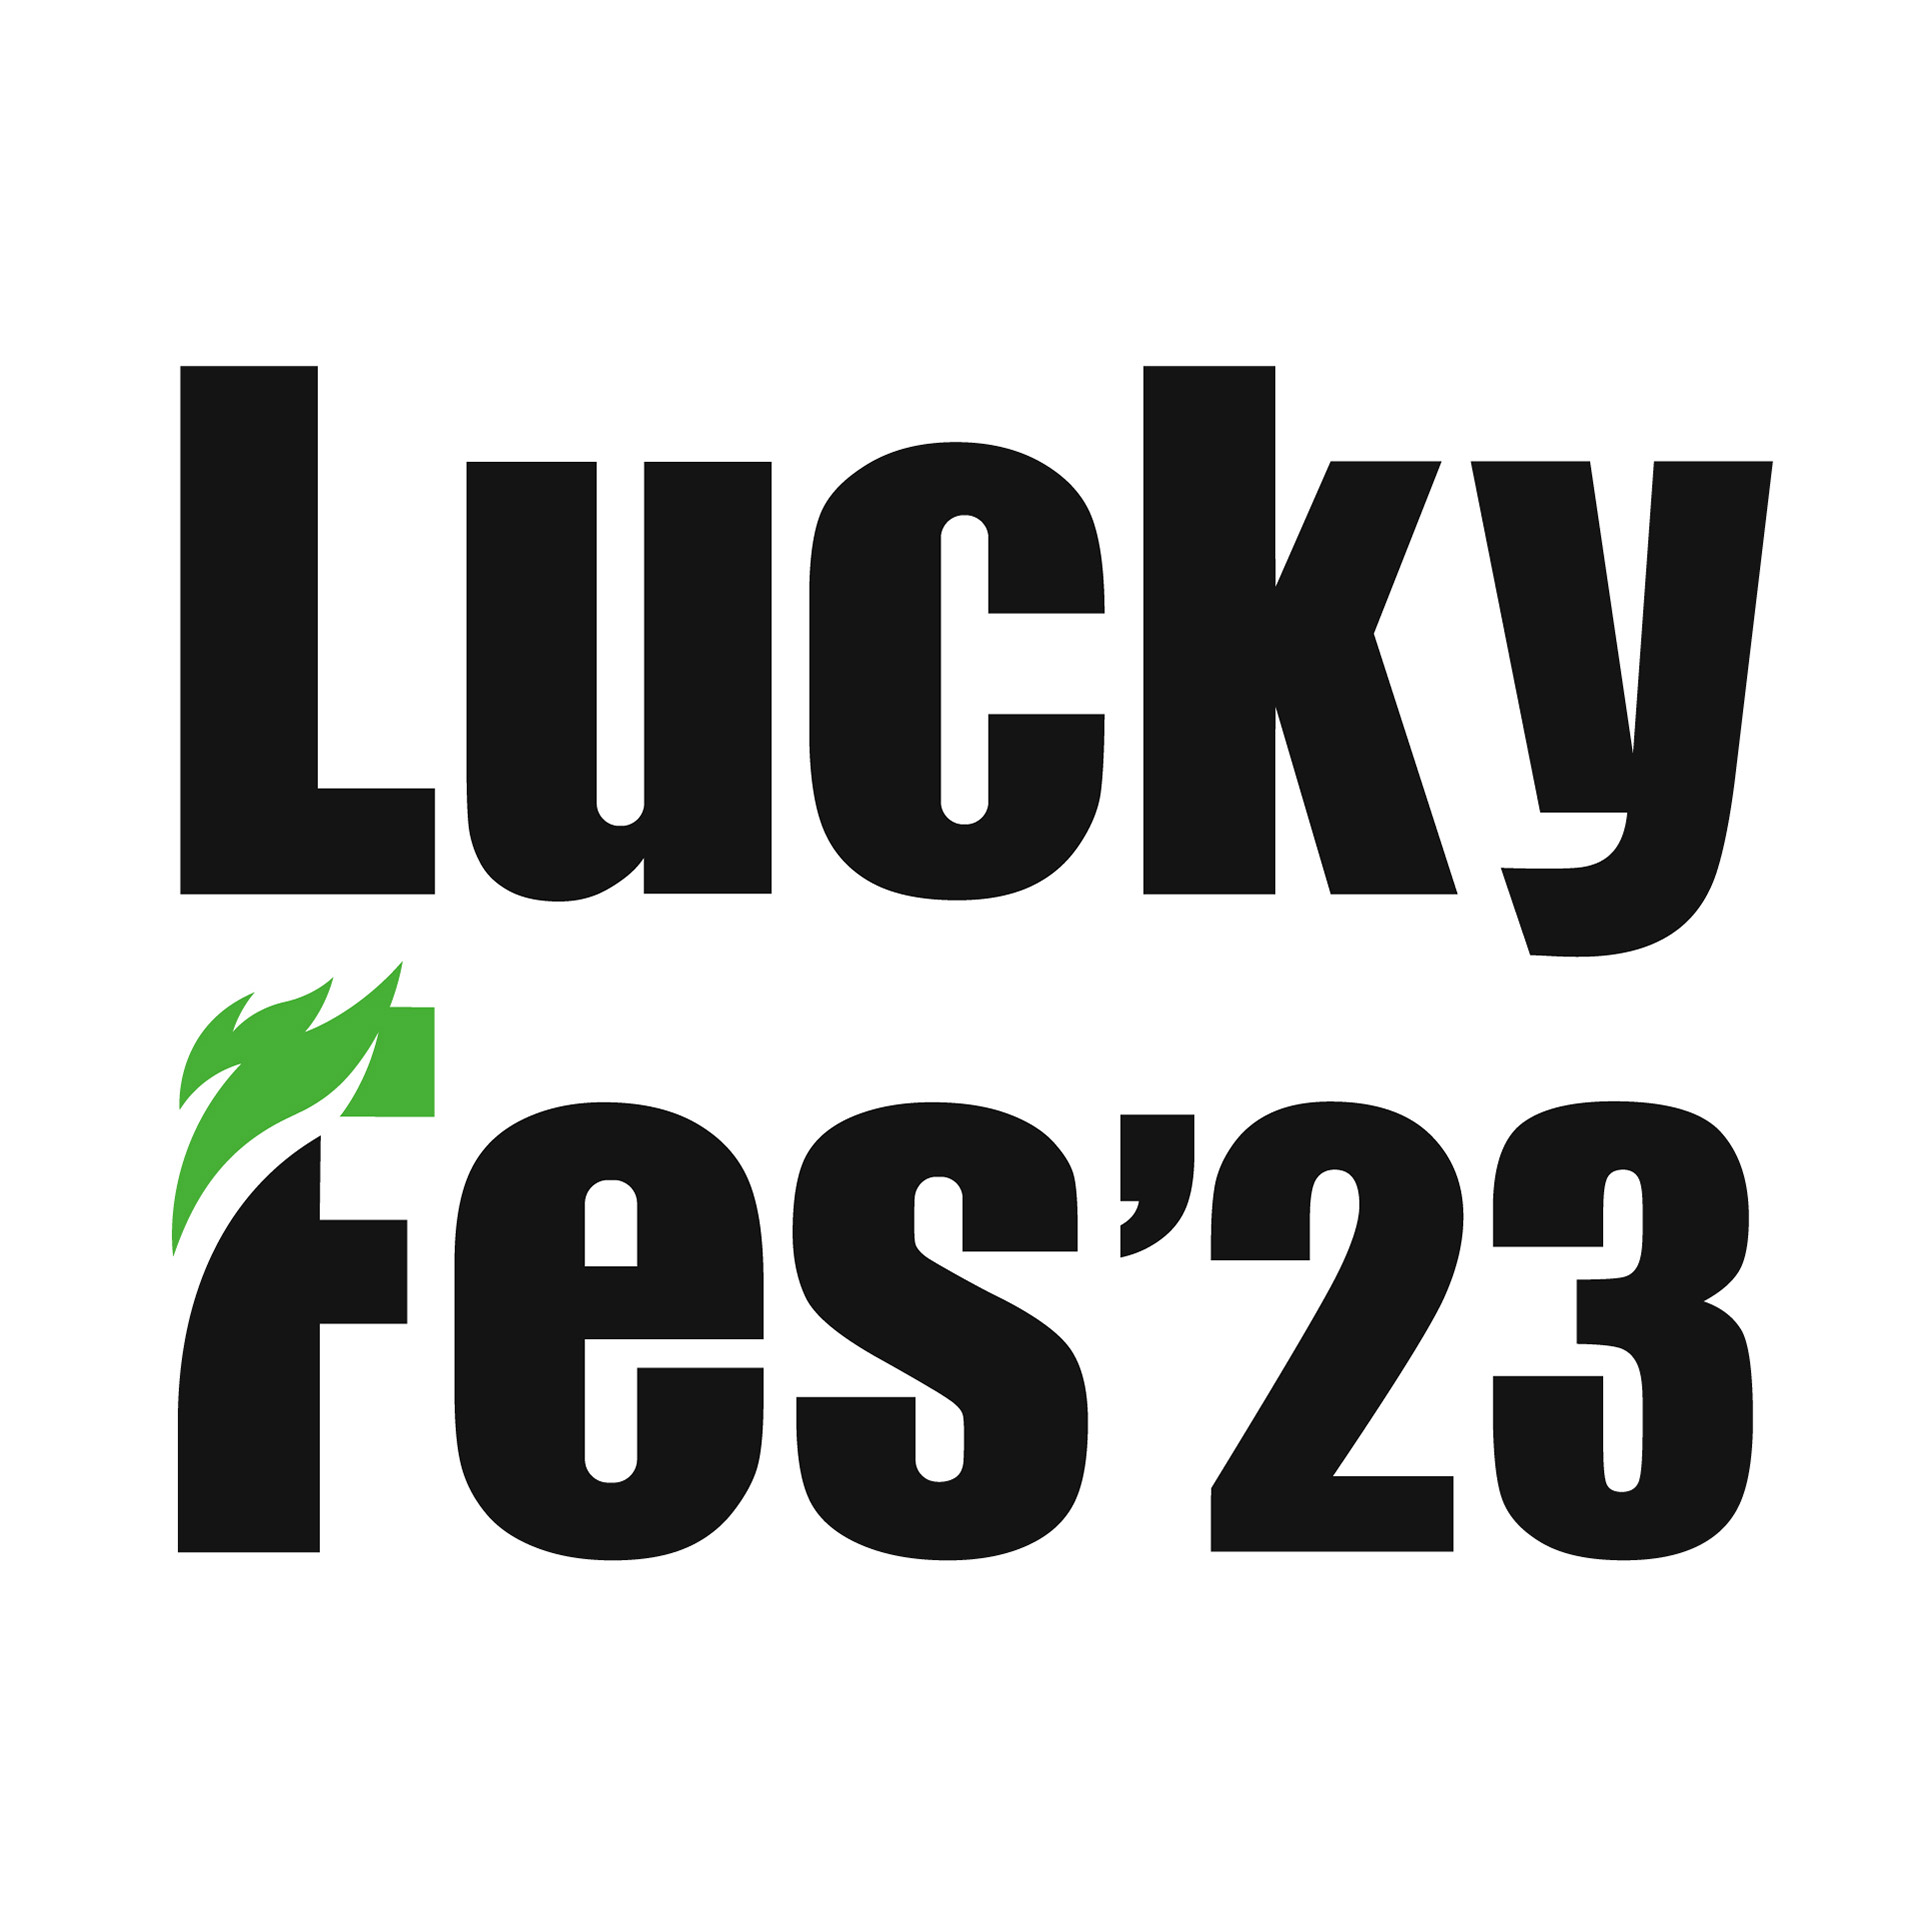 Lucky Fes '23　ラッキーフェス　チケット　7/16(日)